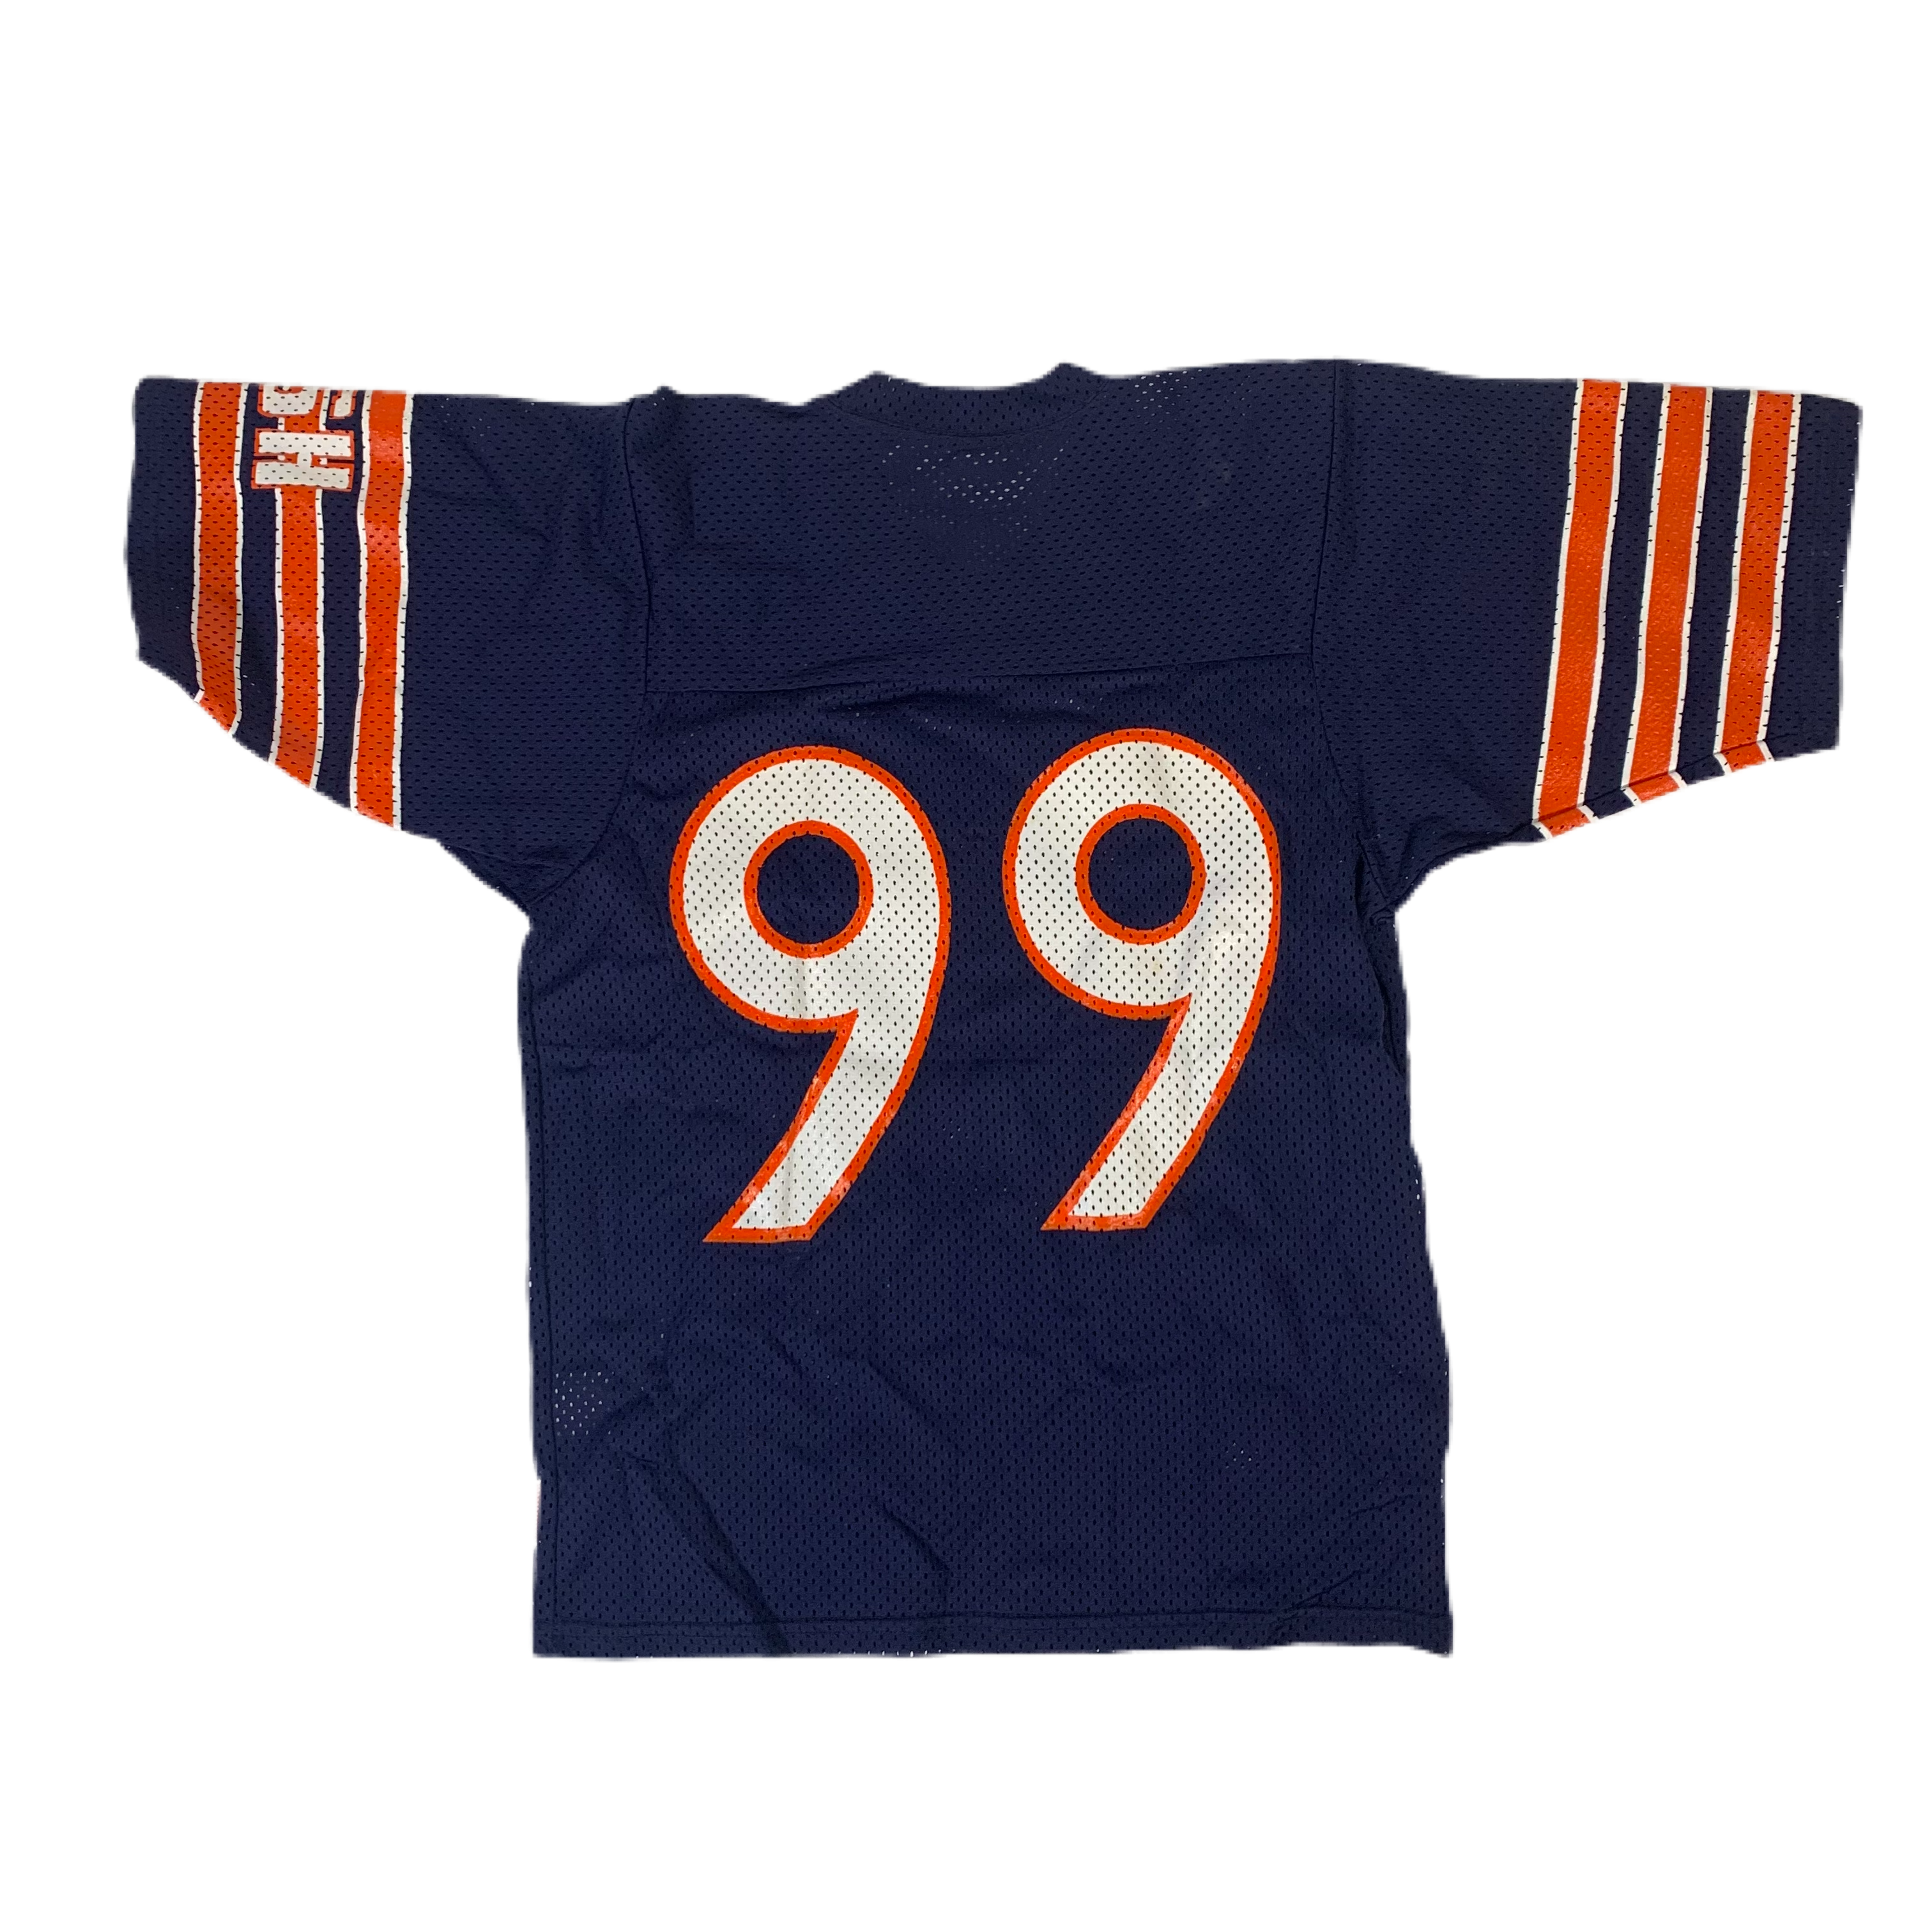 chicago bears football jersey